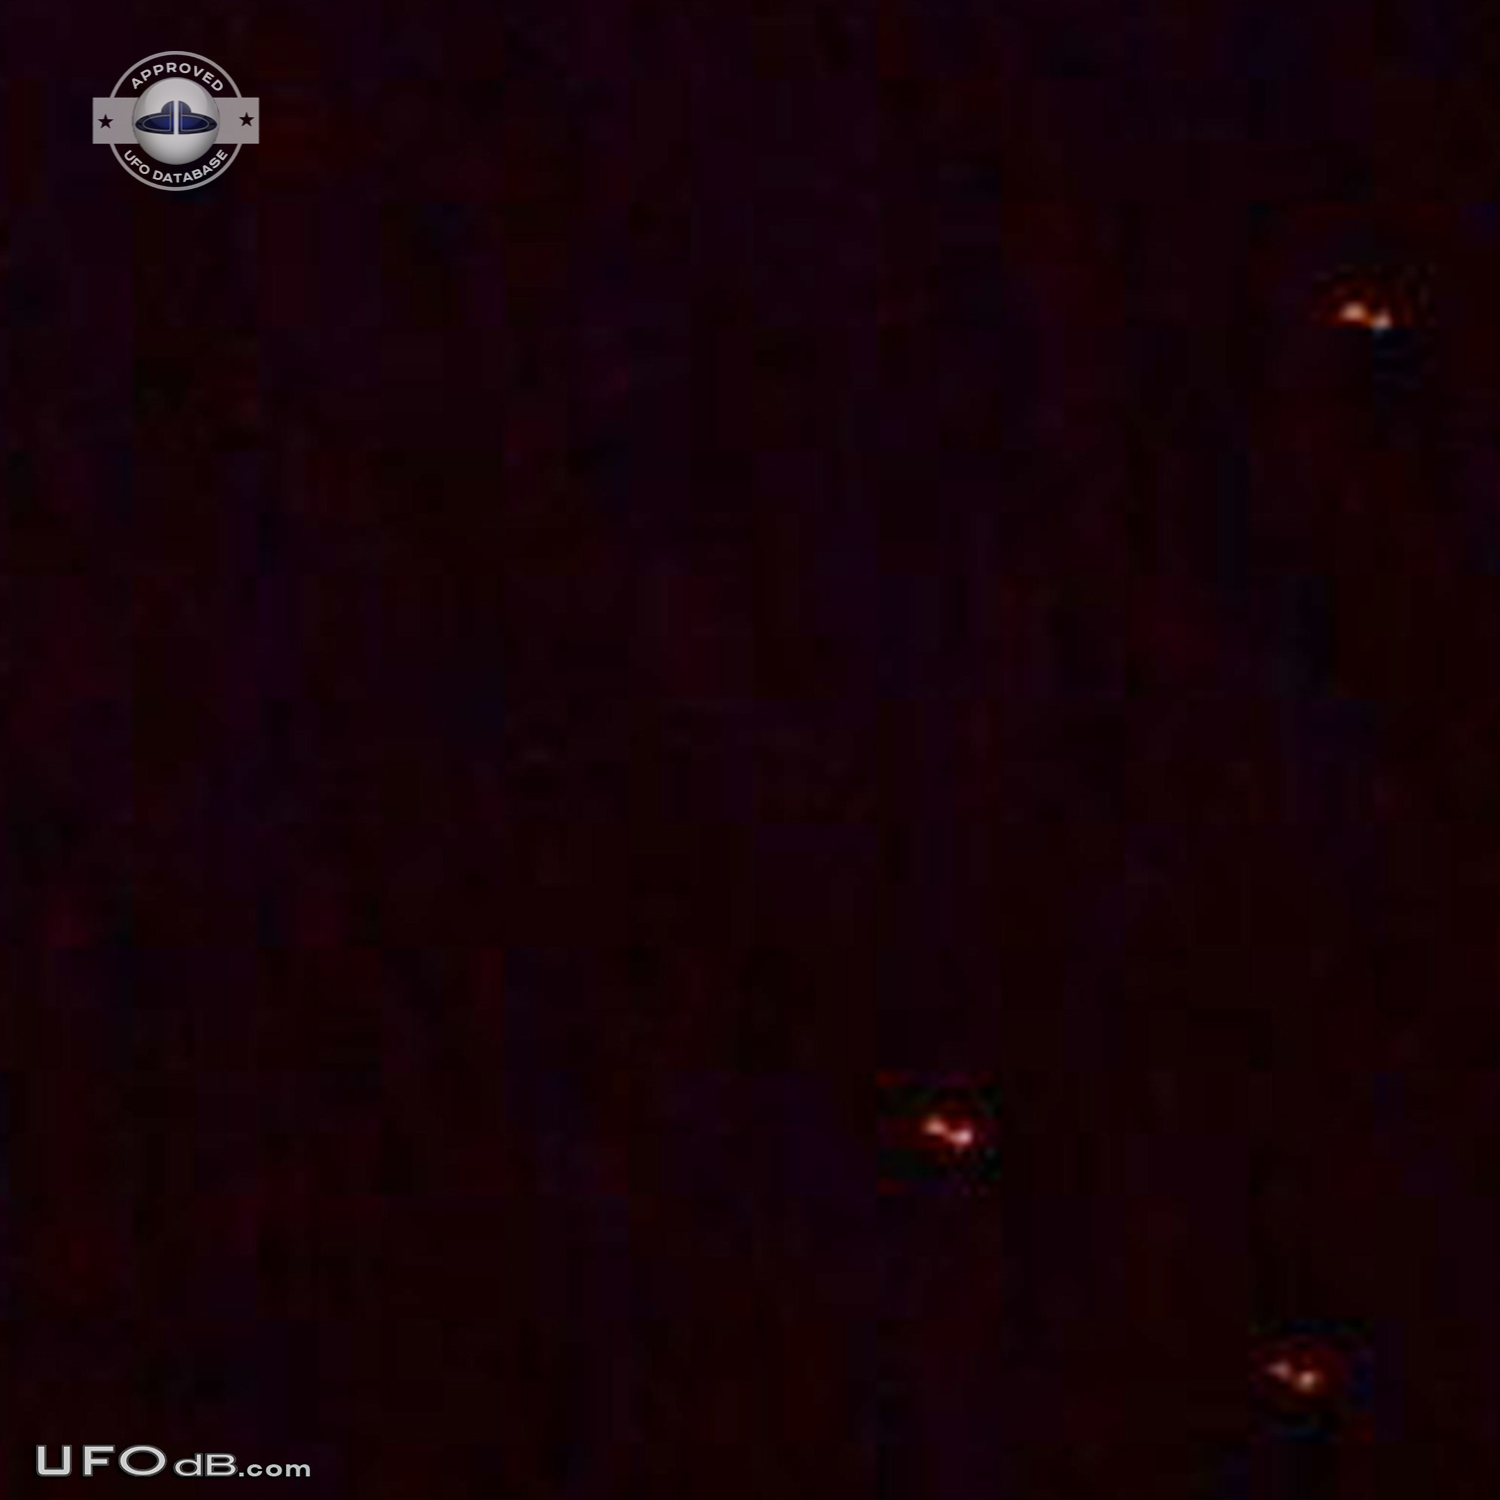 Fleet of 10 to 20 Orange UFOs seen in Sandusky, Ohio - Picture 2012 UFO Picture #427-1